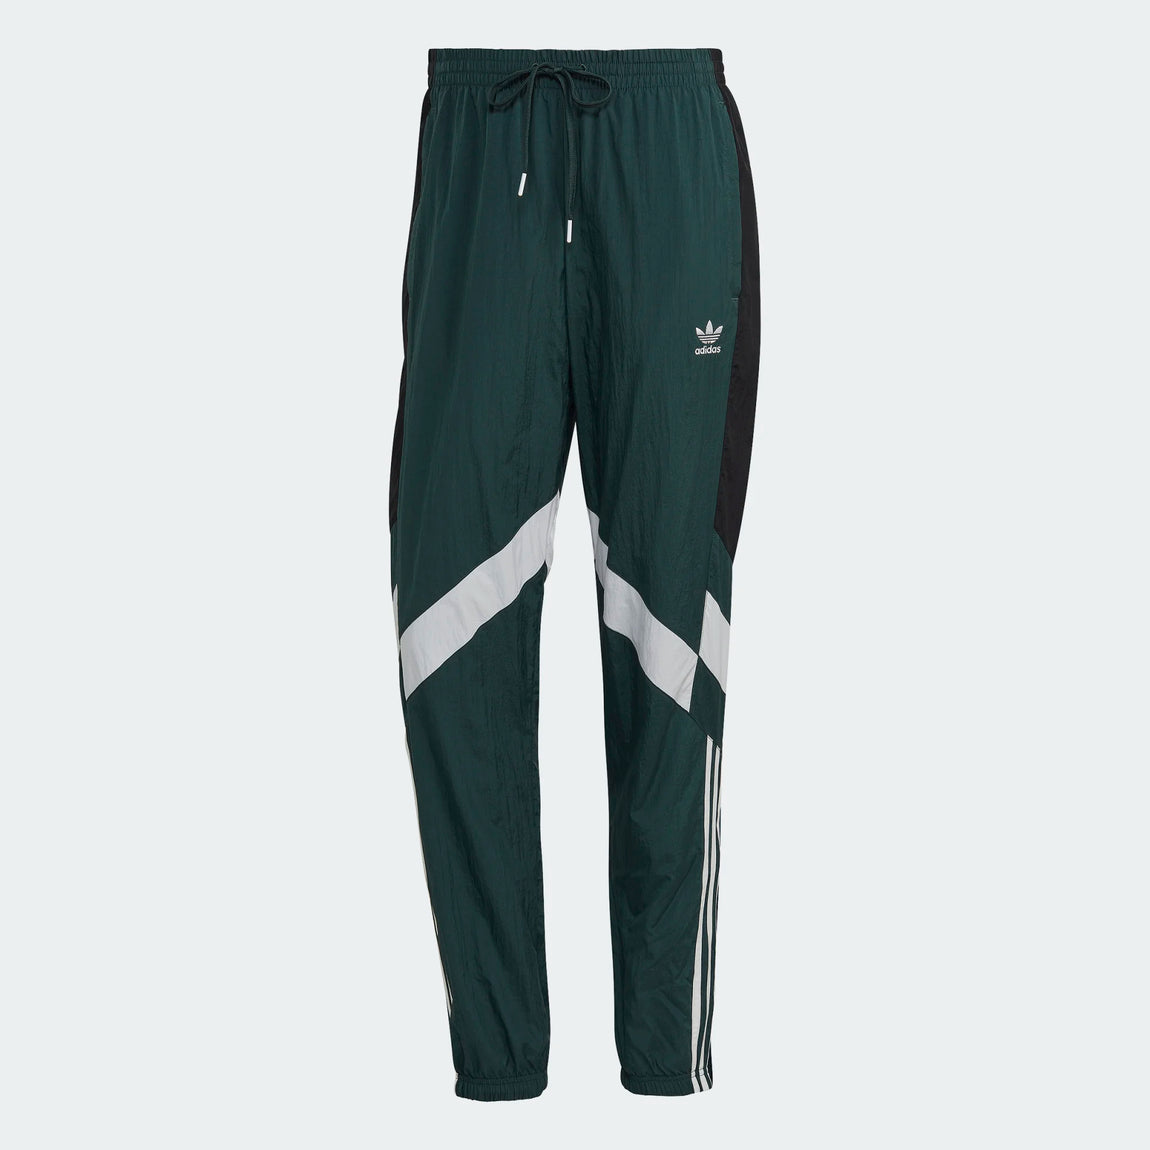 Adidas Woven Track Pants (Mineral Green) - Adidas Woven Track Pants (Mineral Green) - 